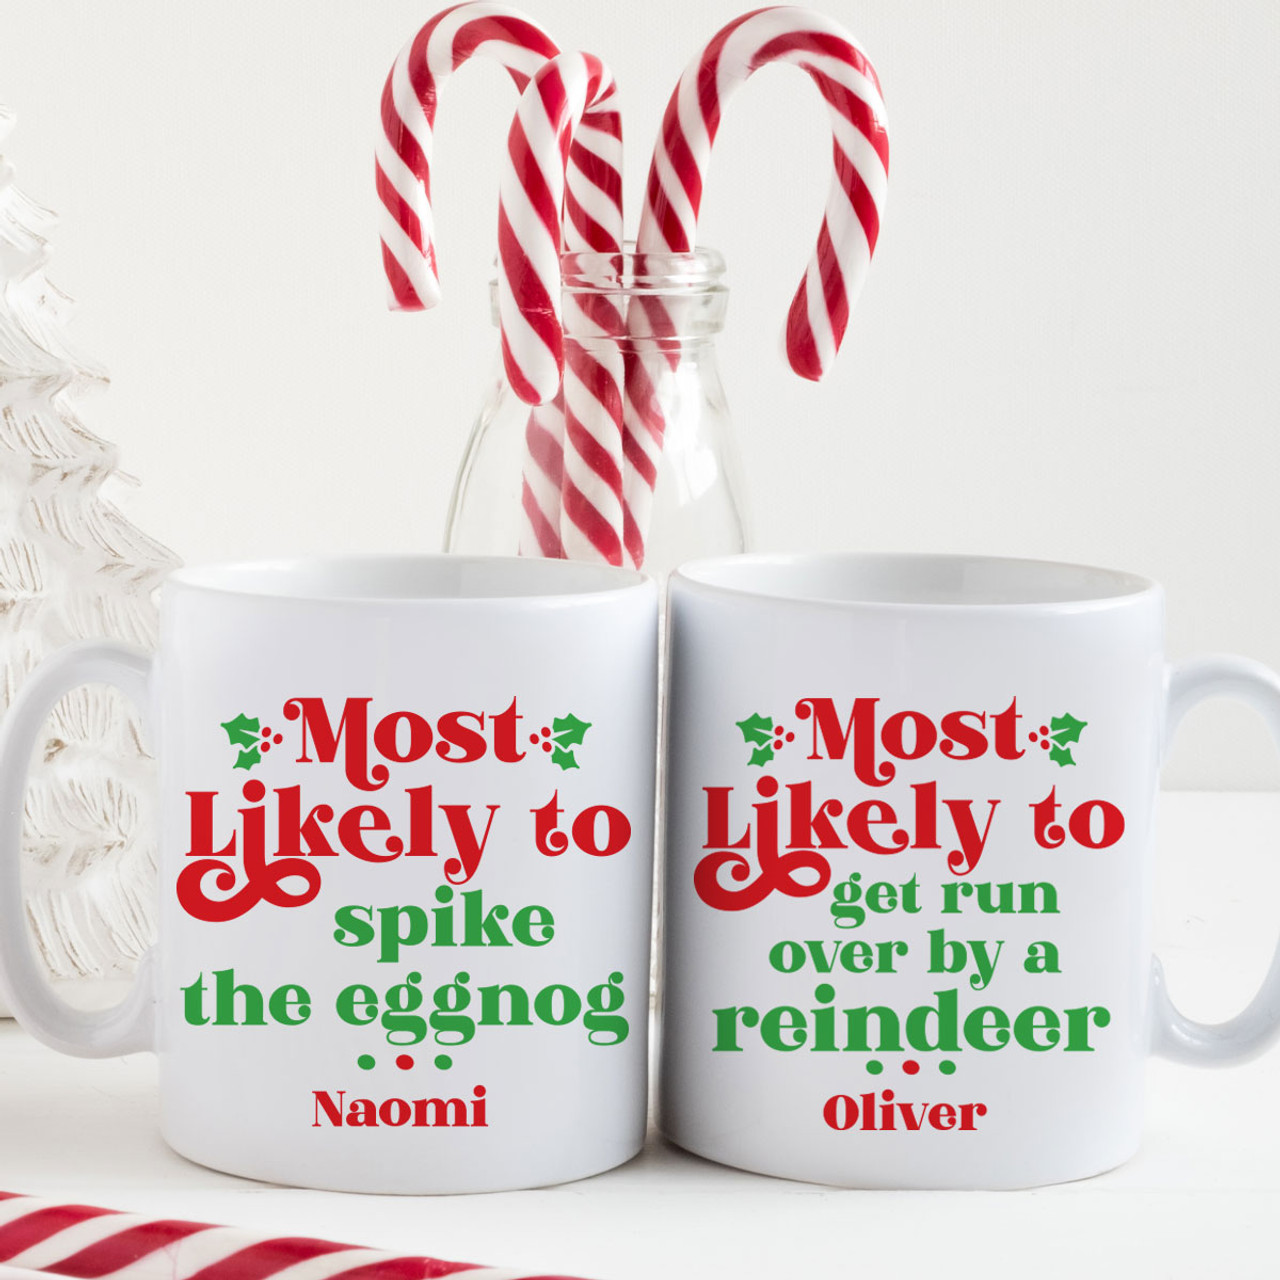 Festive Friends Christmas Mug